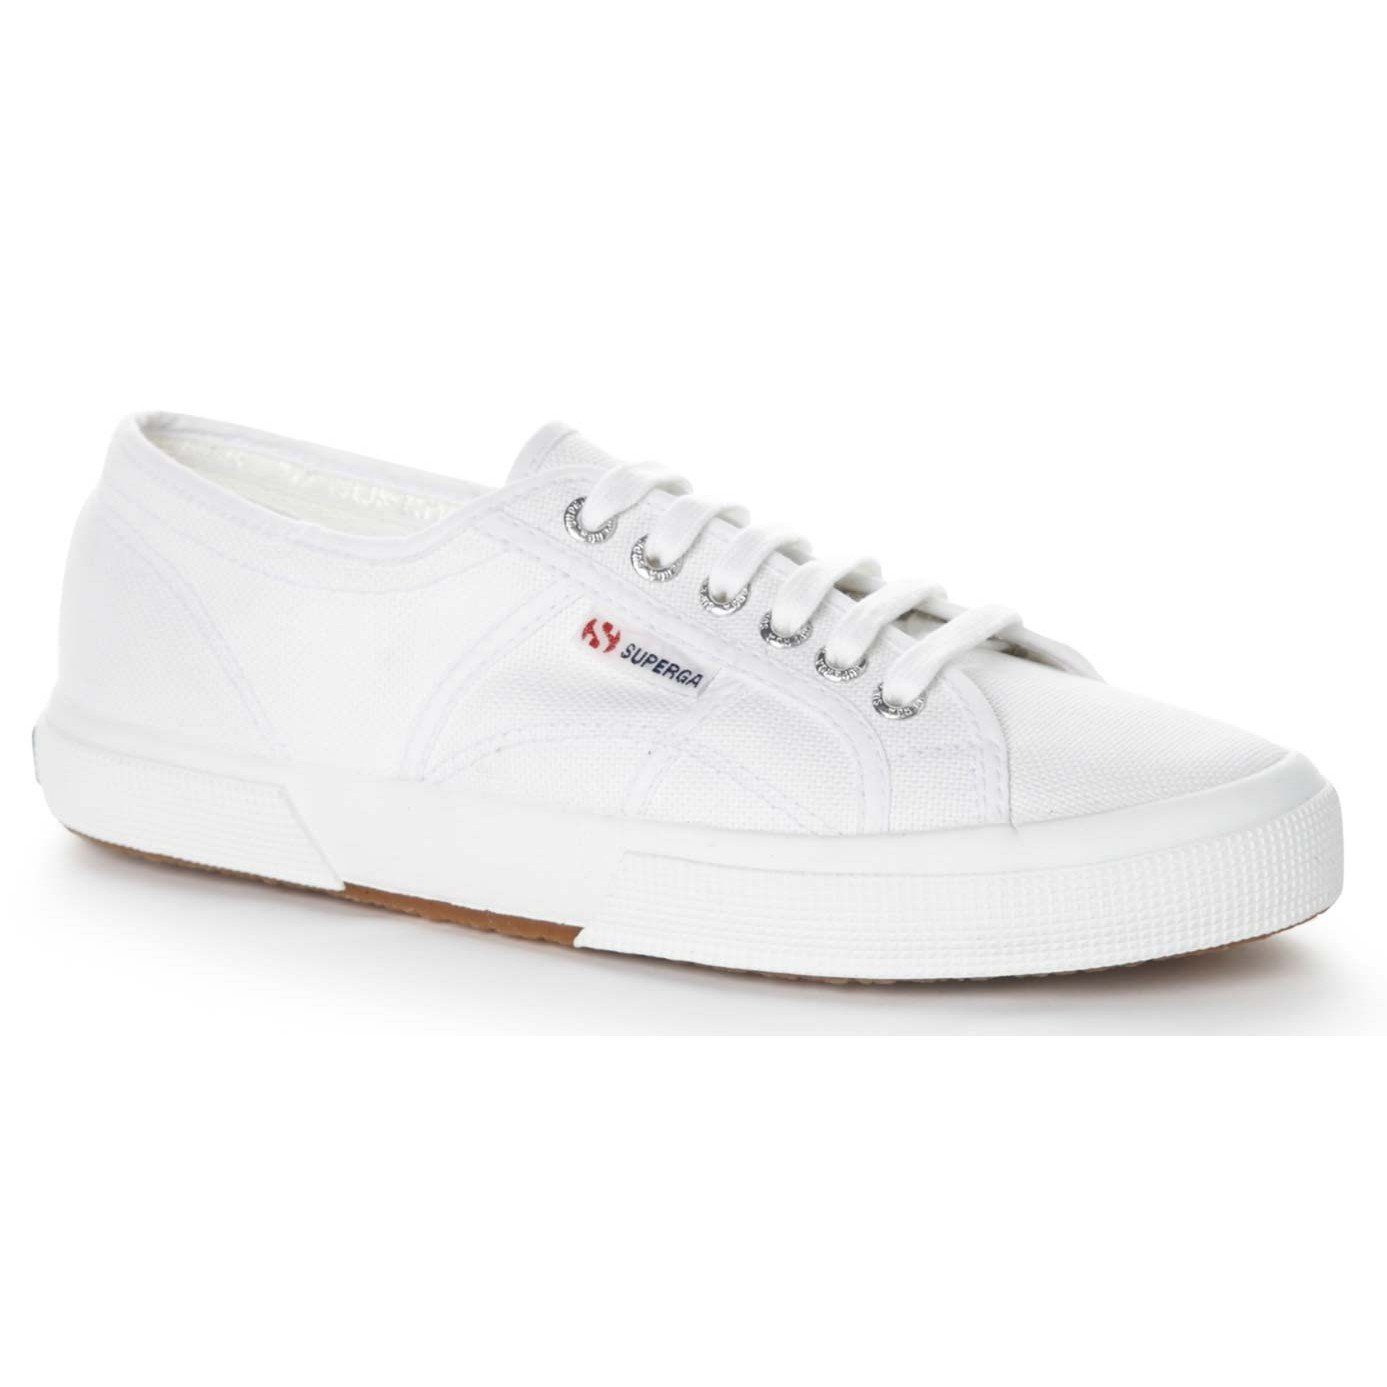 Classic Sneaker Superga Superga S000010 2750 white (19801003) Cotu